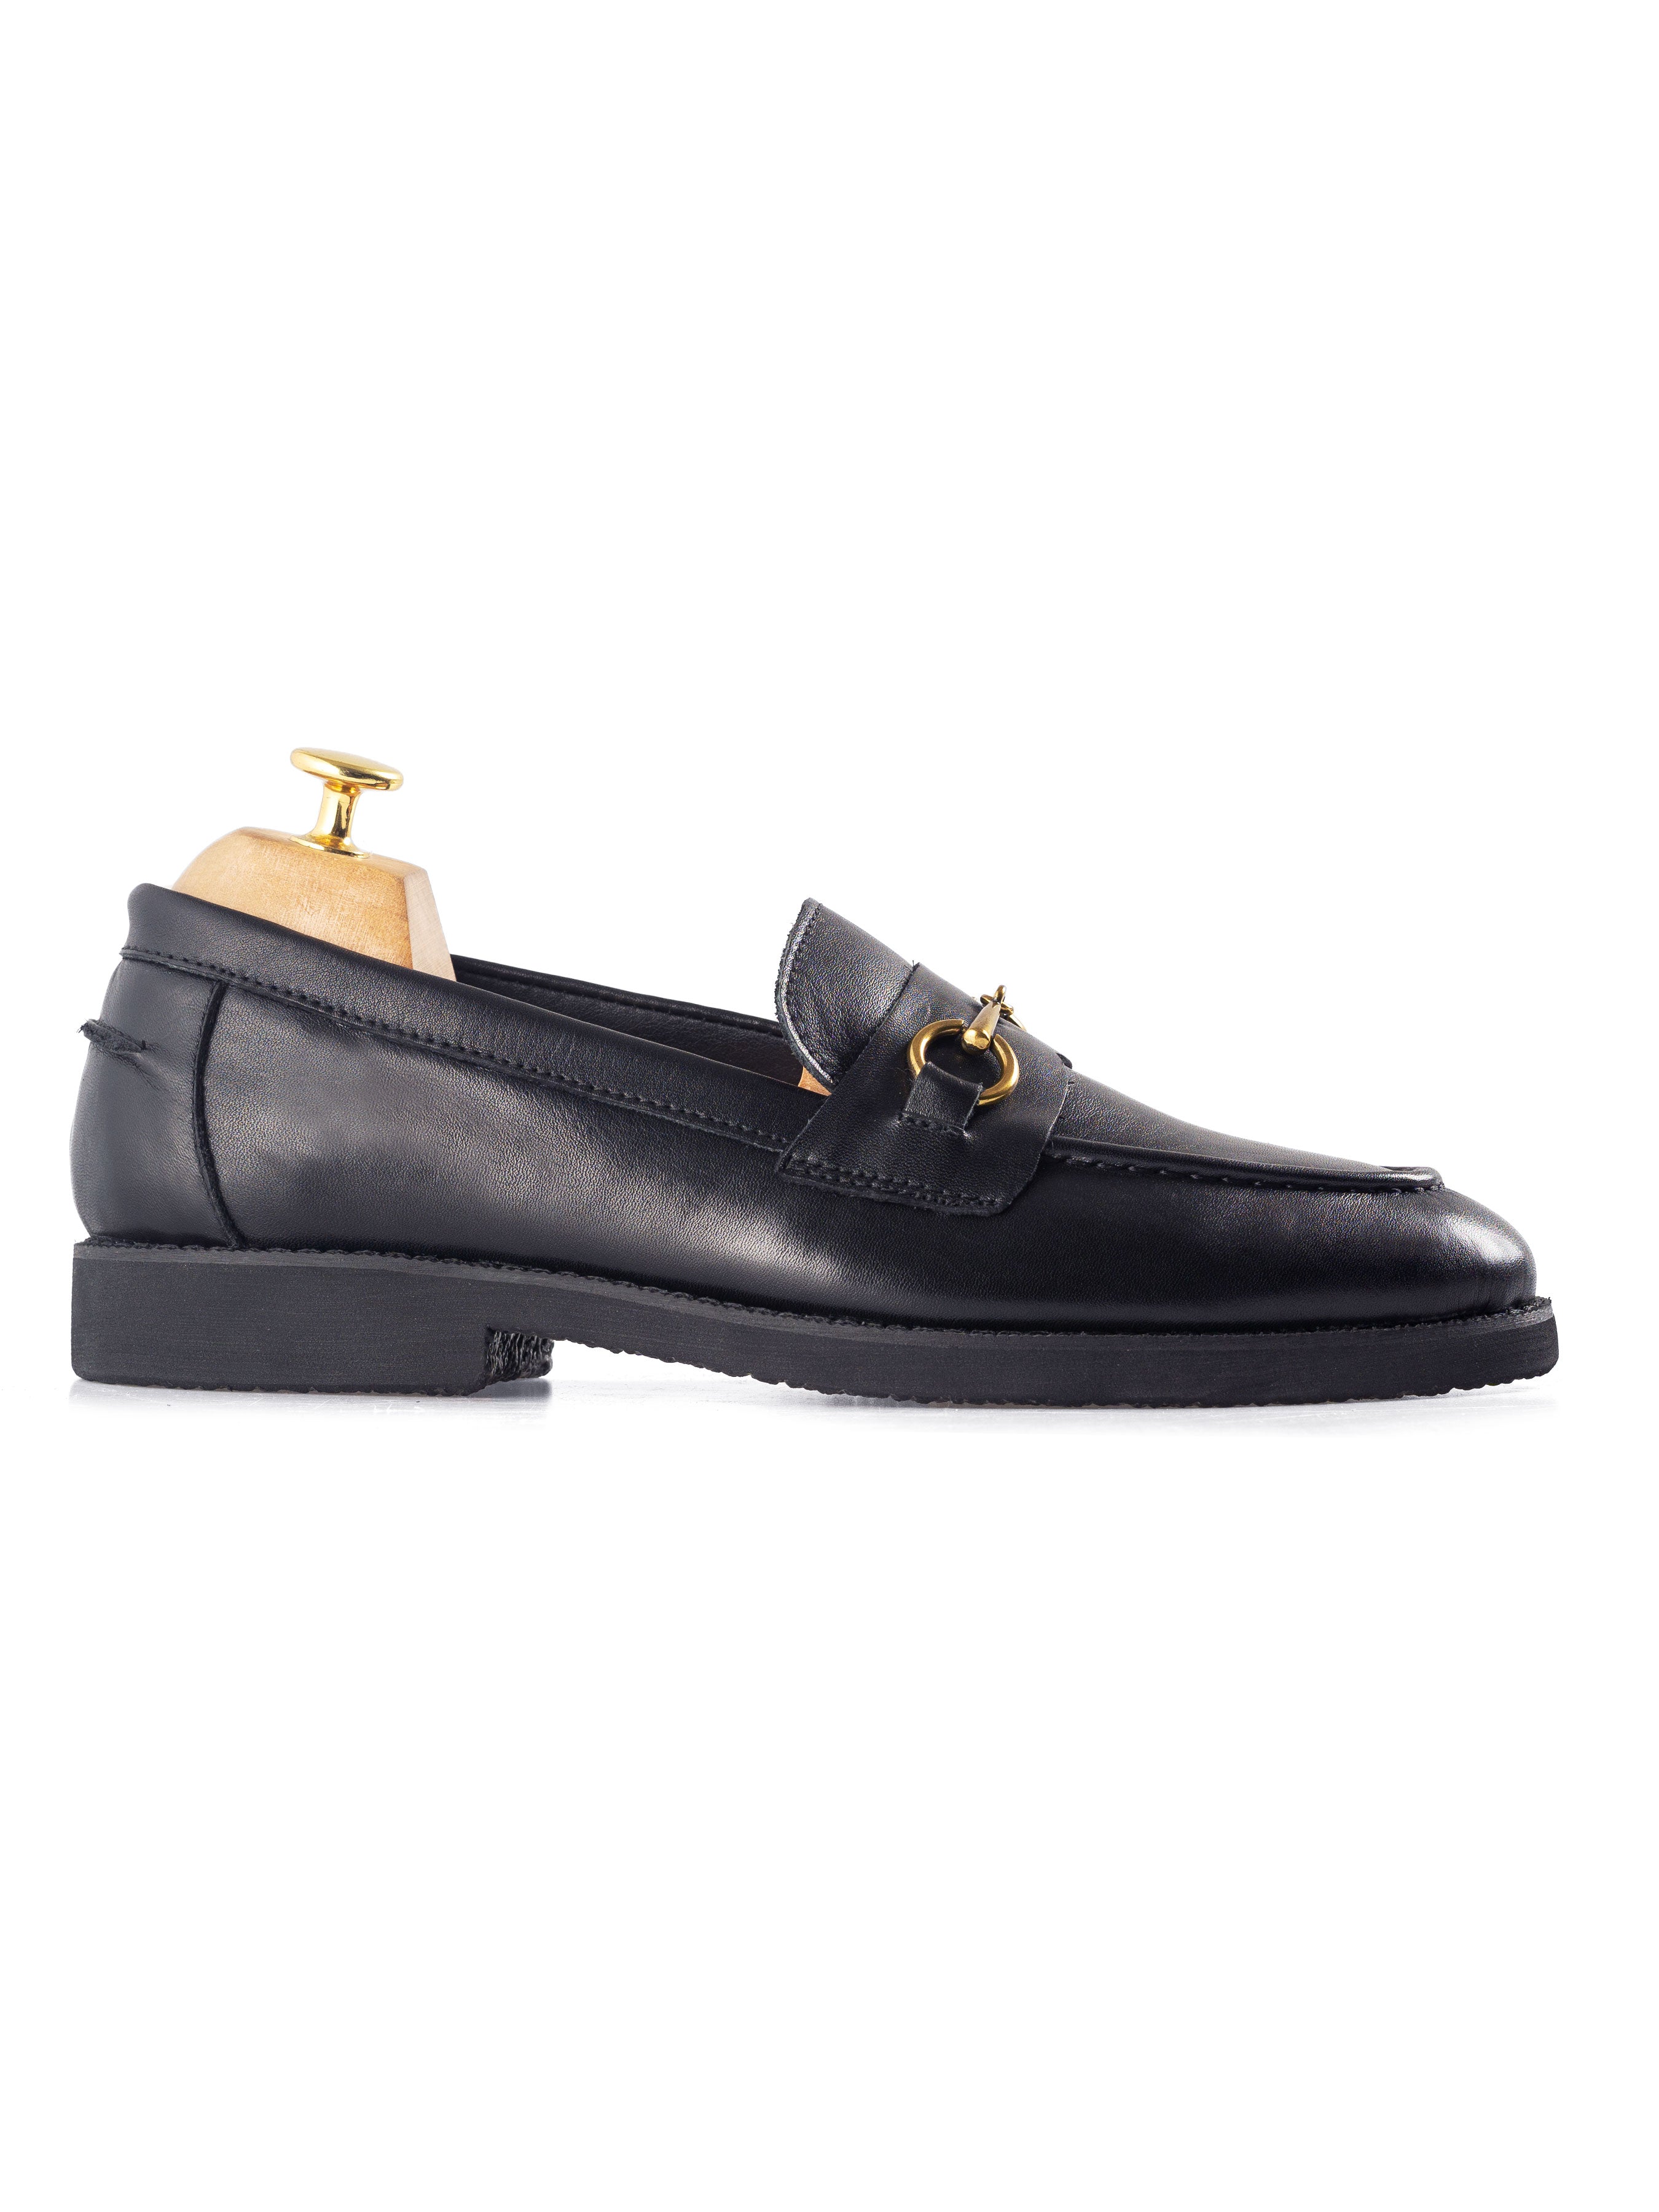 Penny Loafer Horsebit Buckle - Black Leather (Crepe Sole) | Zeve Shoes